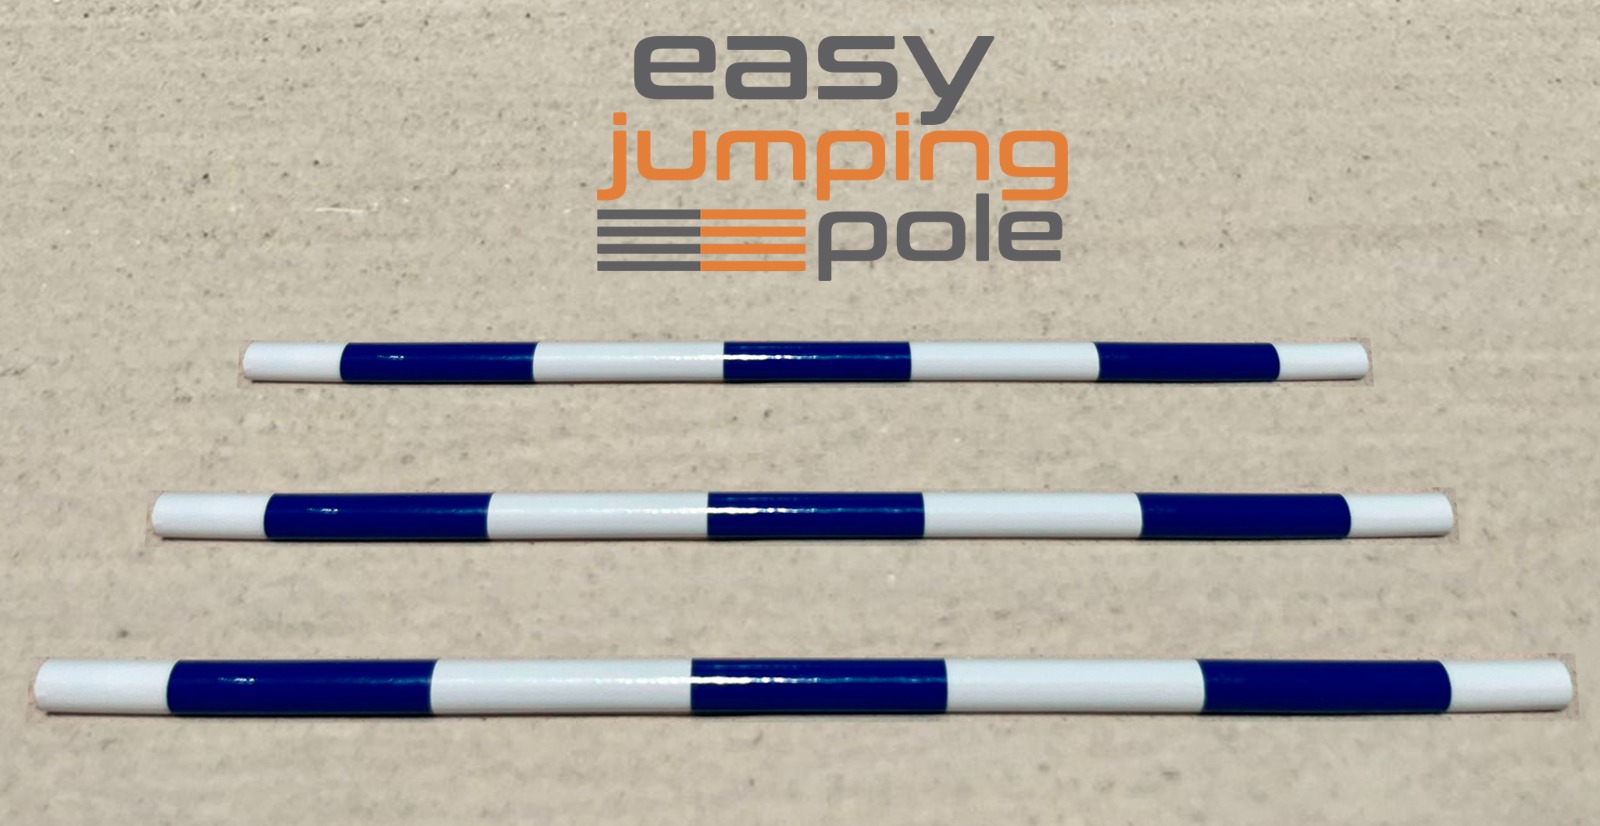 Easy jumping pole Model C-11